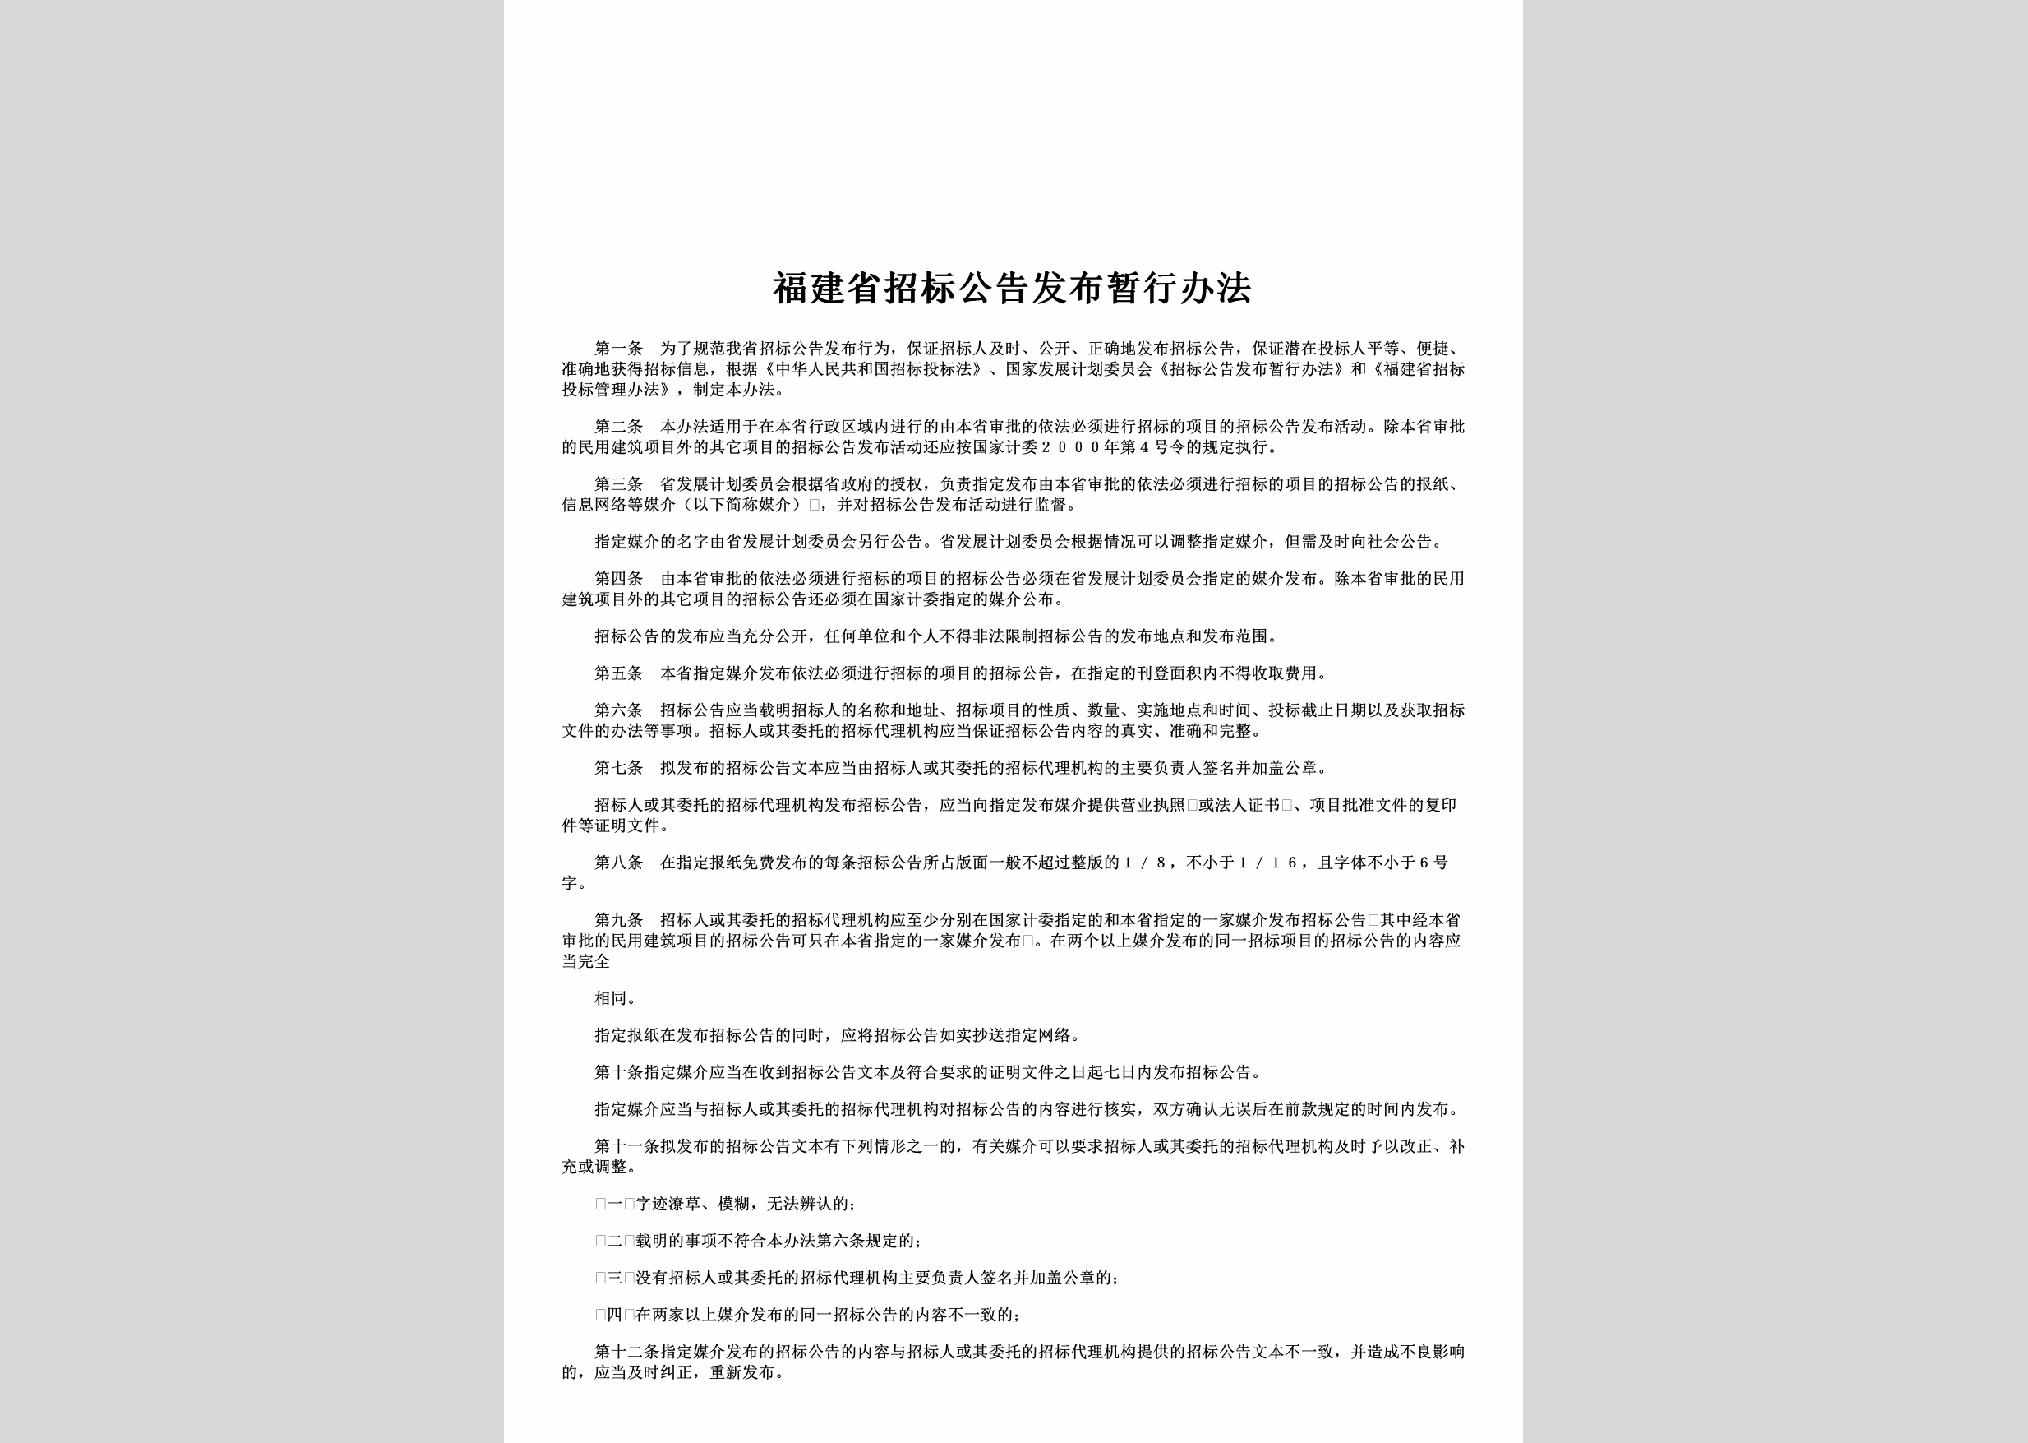 FJ-ZBGGFBBF-2001：福建省招标公告发布暂行办法